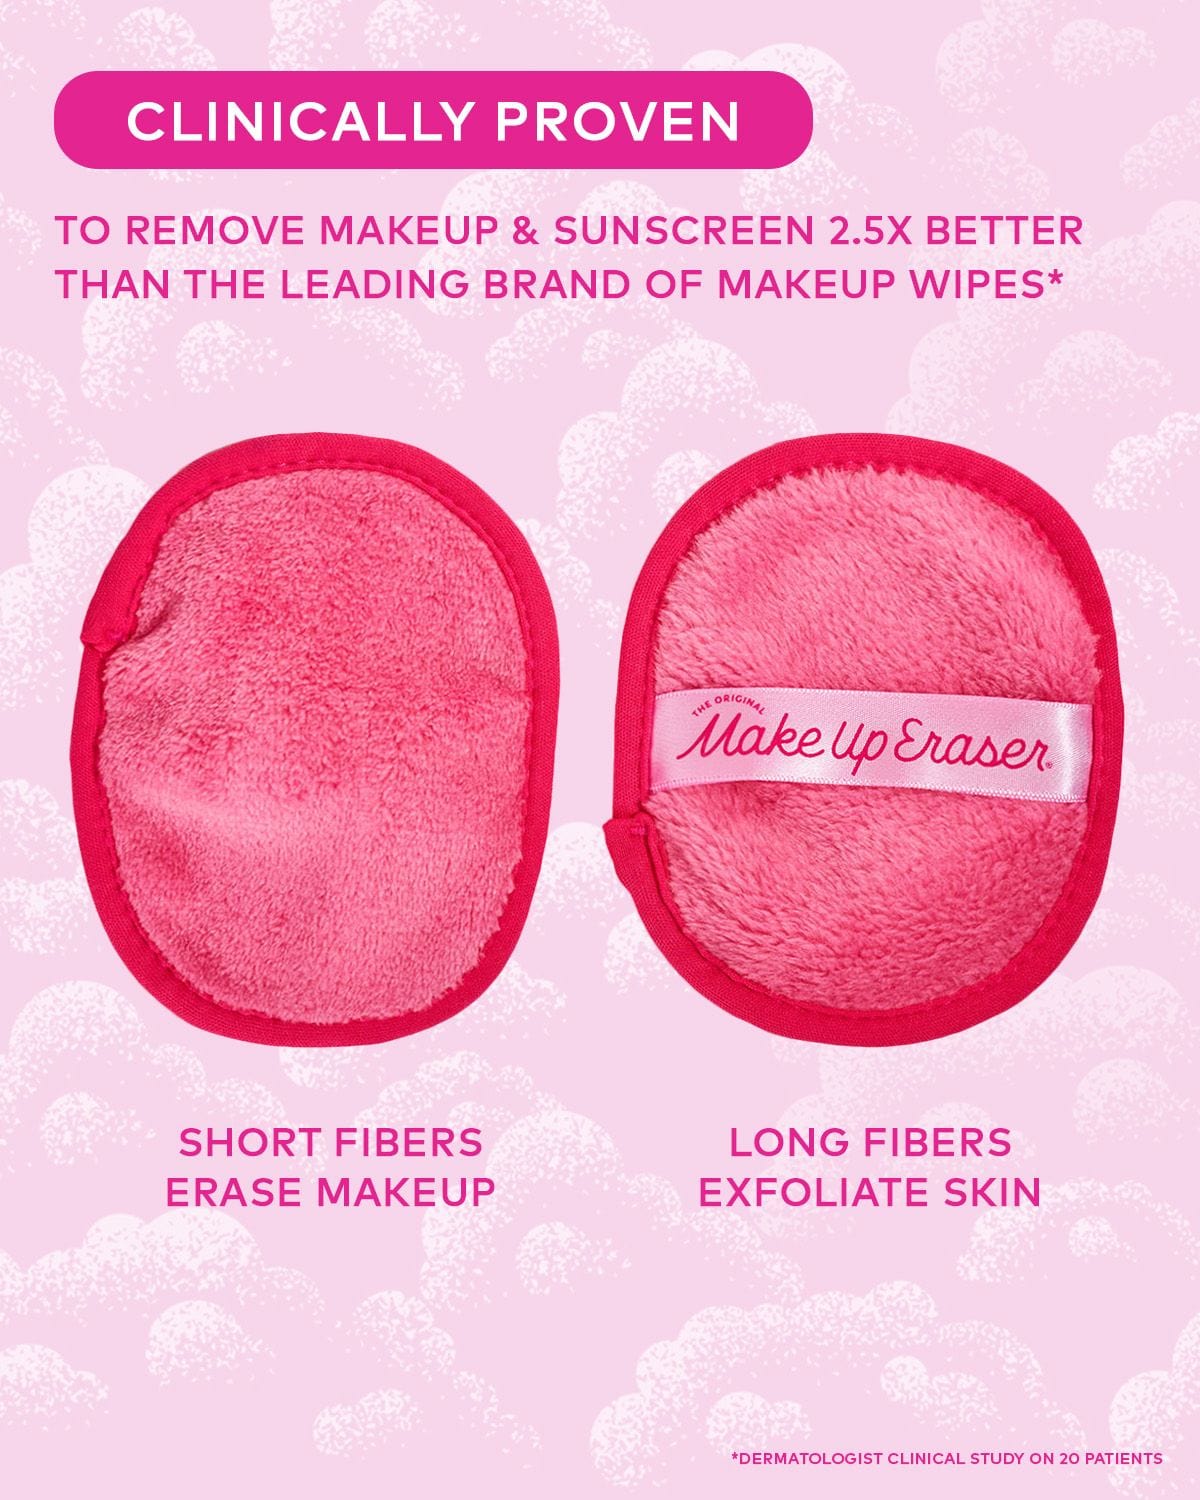 MakeUp Eraser - 7 Day Set